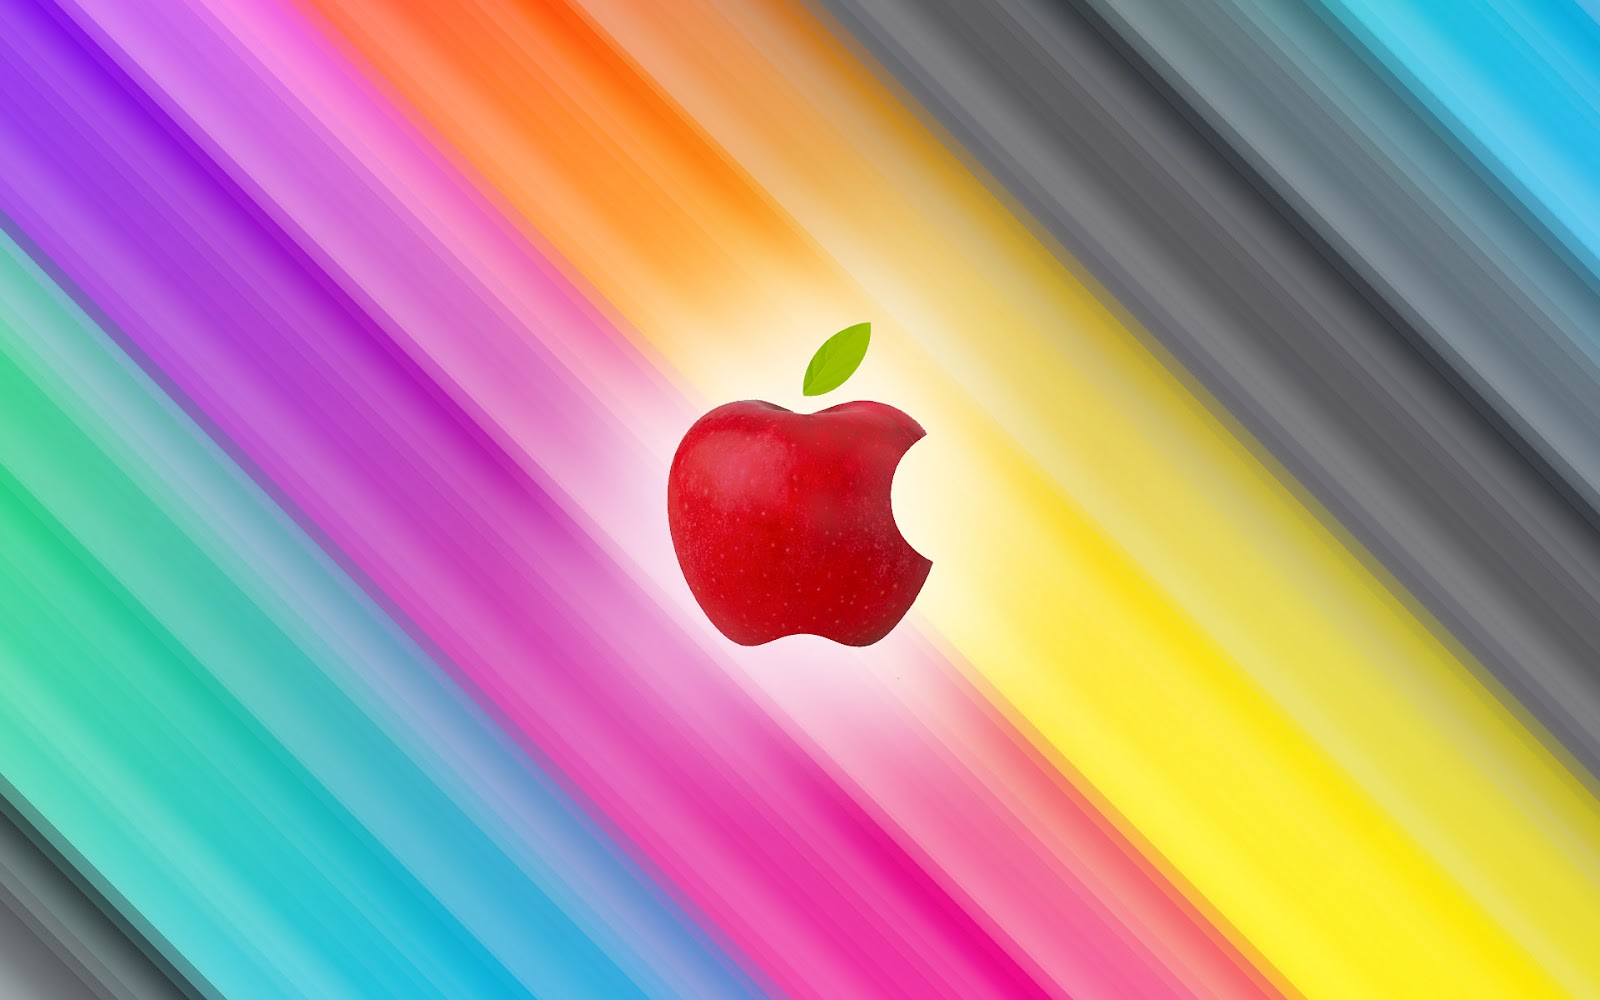 http://4.bp.blogspot.com/-bkQyJGZXdmc/UC9WT7oB3cI/AAAAAAAAFX4/2okpiuEGo9c/s1600/hd-apple-wallpaper-met-rood-logo-en-gekleurde-lijnen-hd-apple-achtergrond.jpg